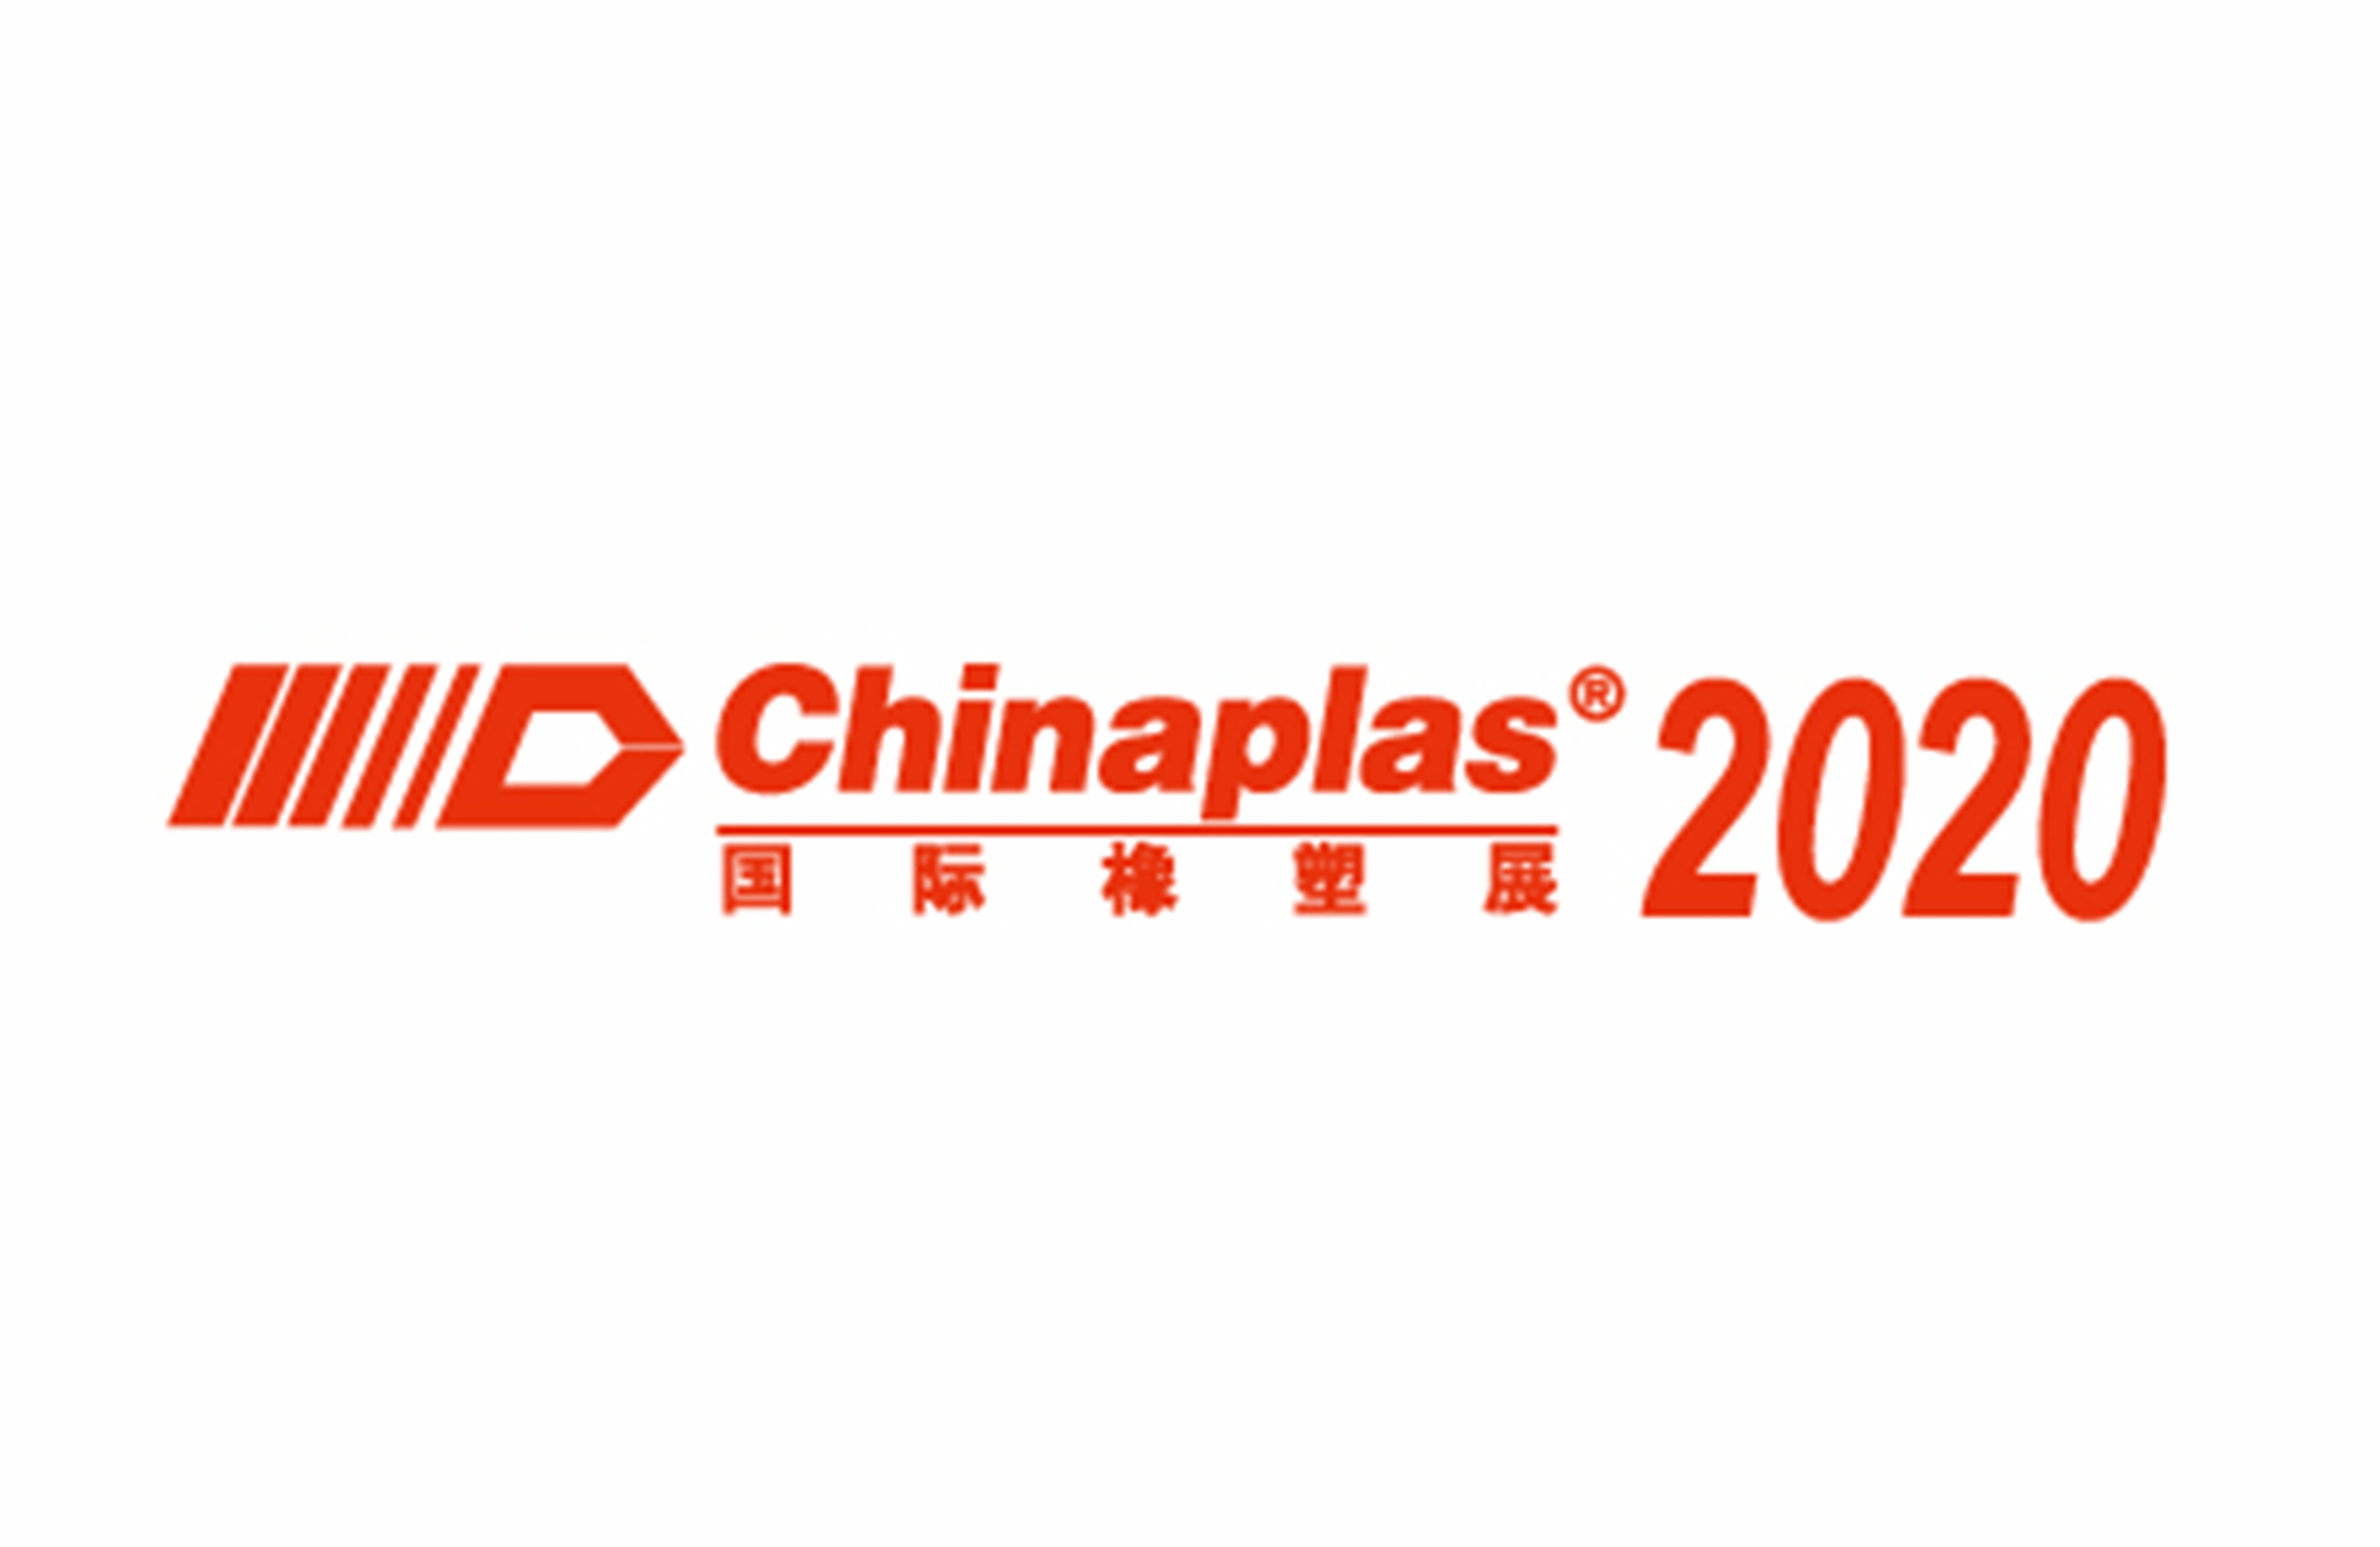 Chinaplas 2020 Coming Soon